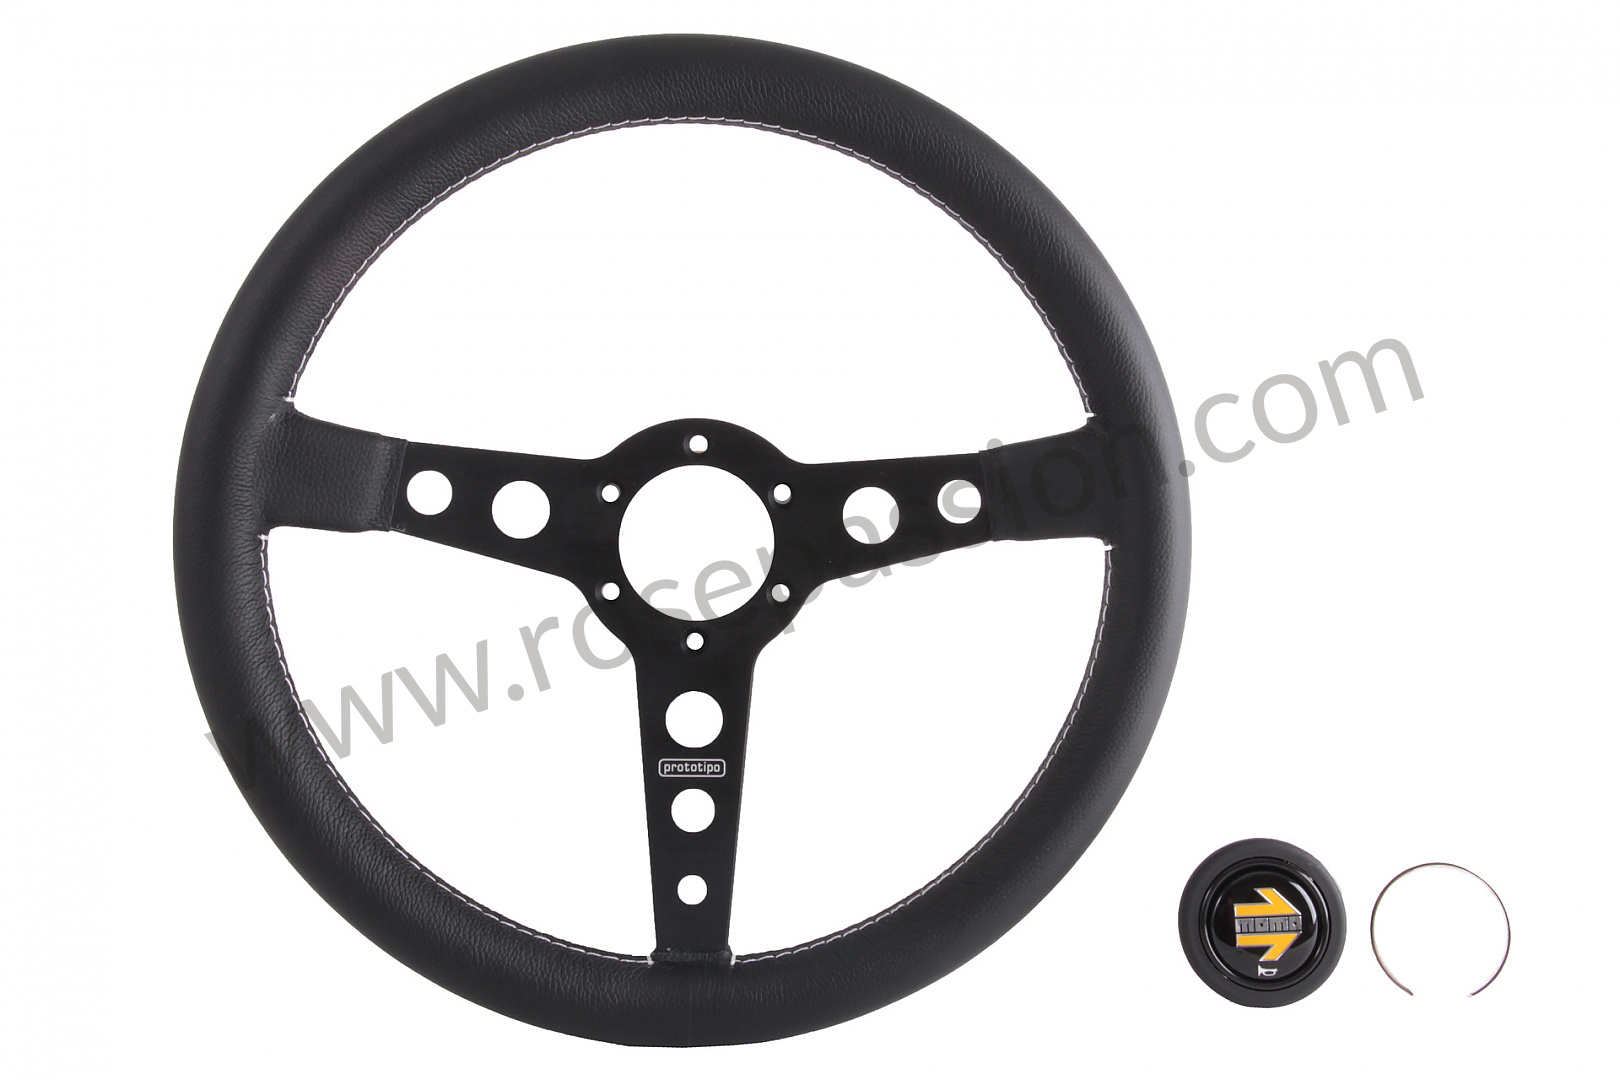 https://cdn.rosepassion.com/p405165-black-leather-momo-prototipo-three-spoke-steering-wheel-black-black-black-noir-350-mm-photo-405165-0-webp405165.JPG?w=1920&h=1080&format=jpg-95